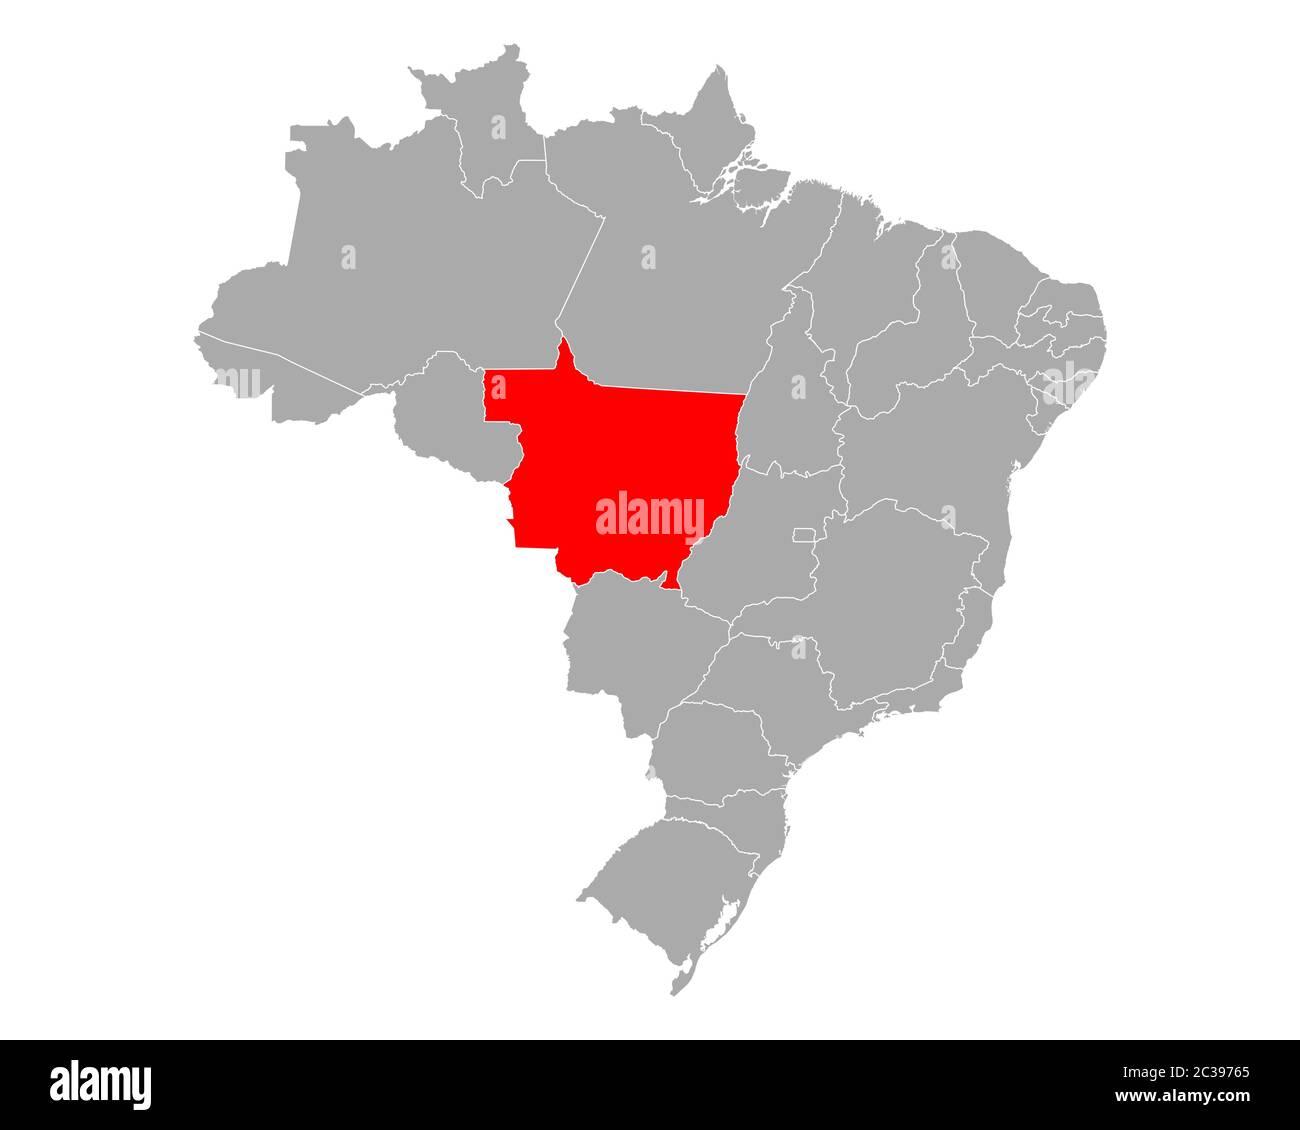 Map Of Mato Grosso In Brazil 2C39765 